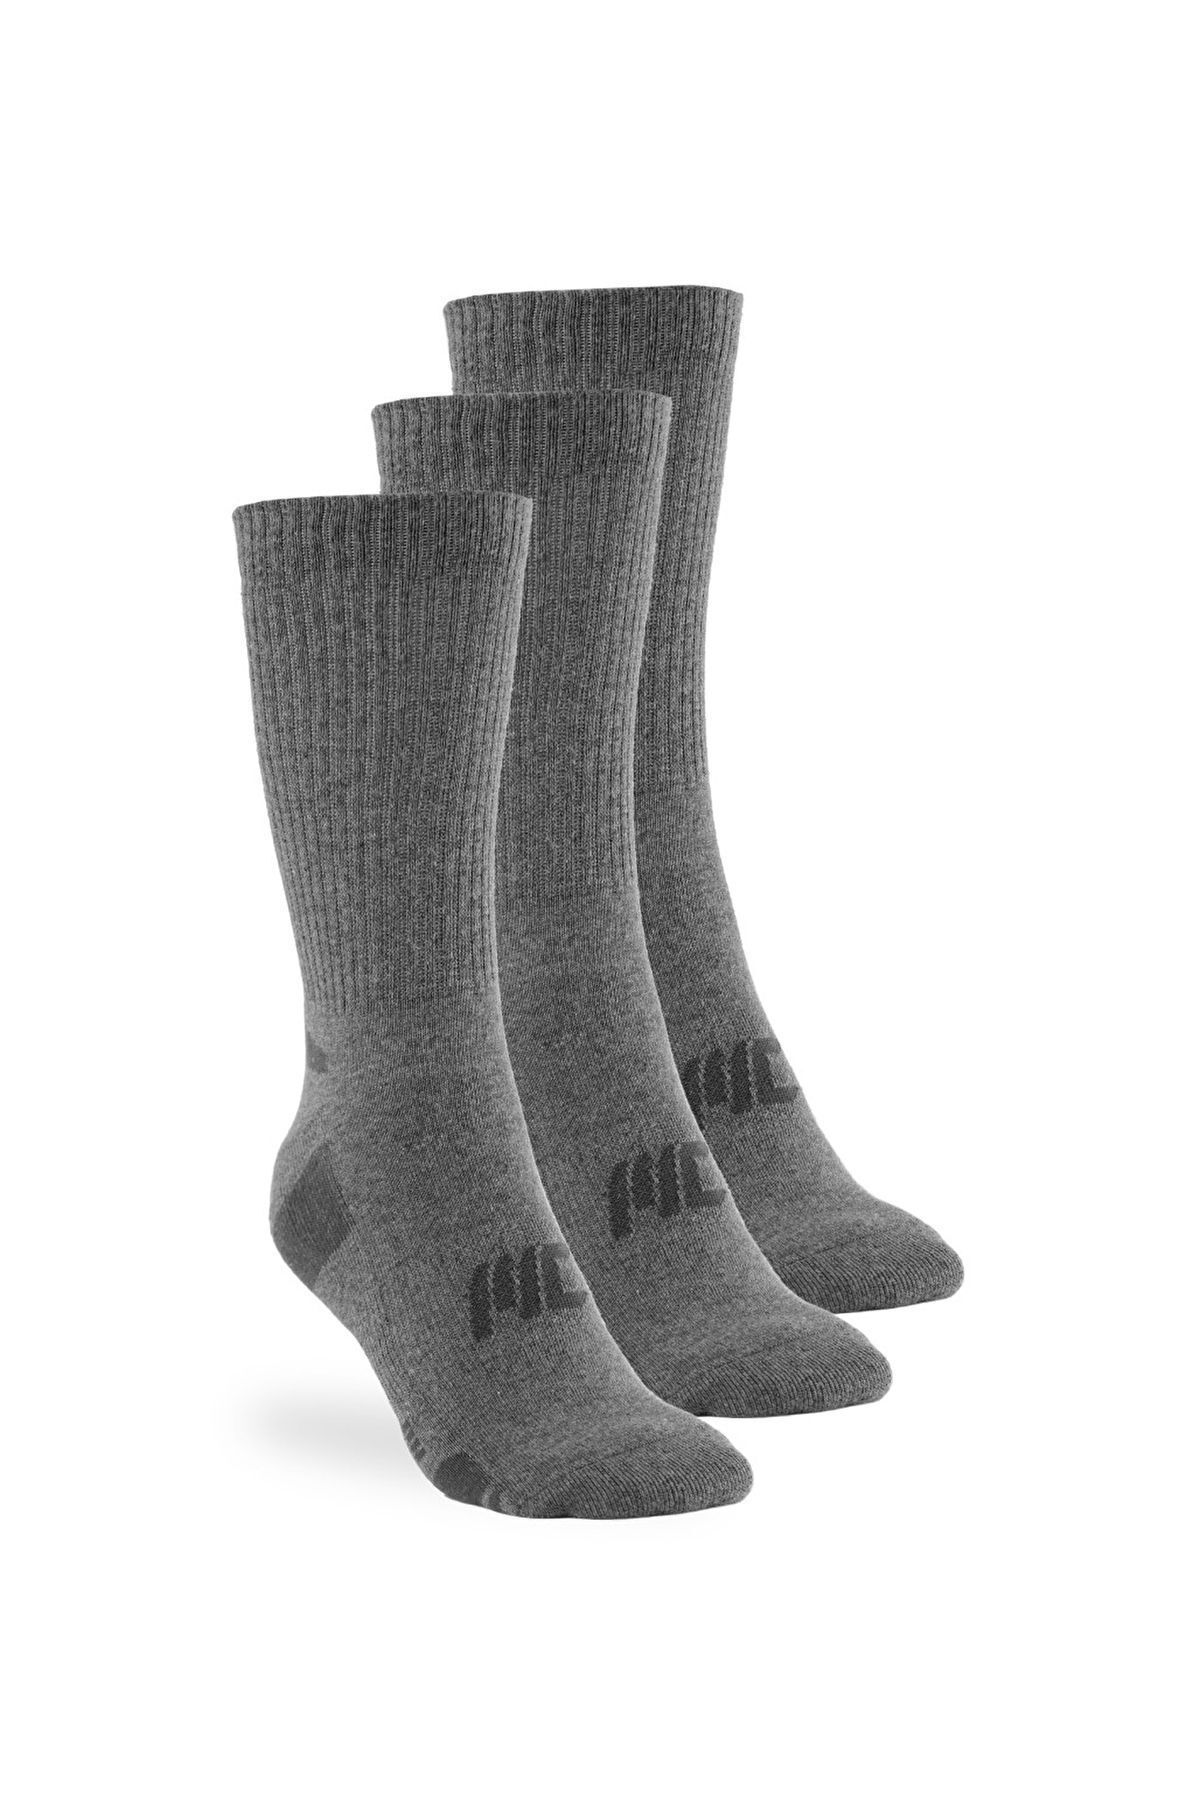 MUSCLECLOTH Длинные носки Stay Fresh, 3 пары серых 17166